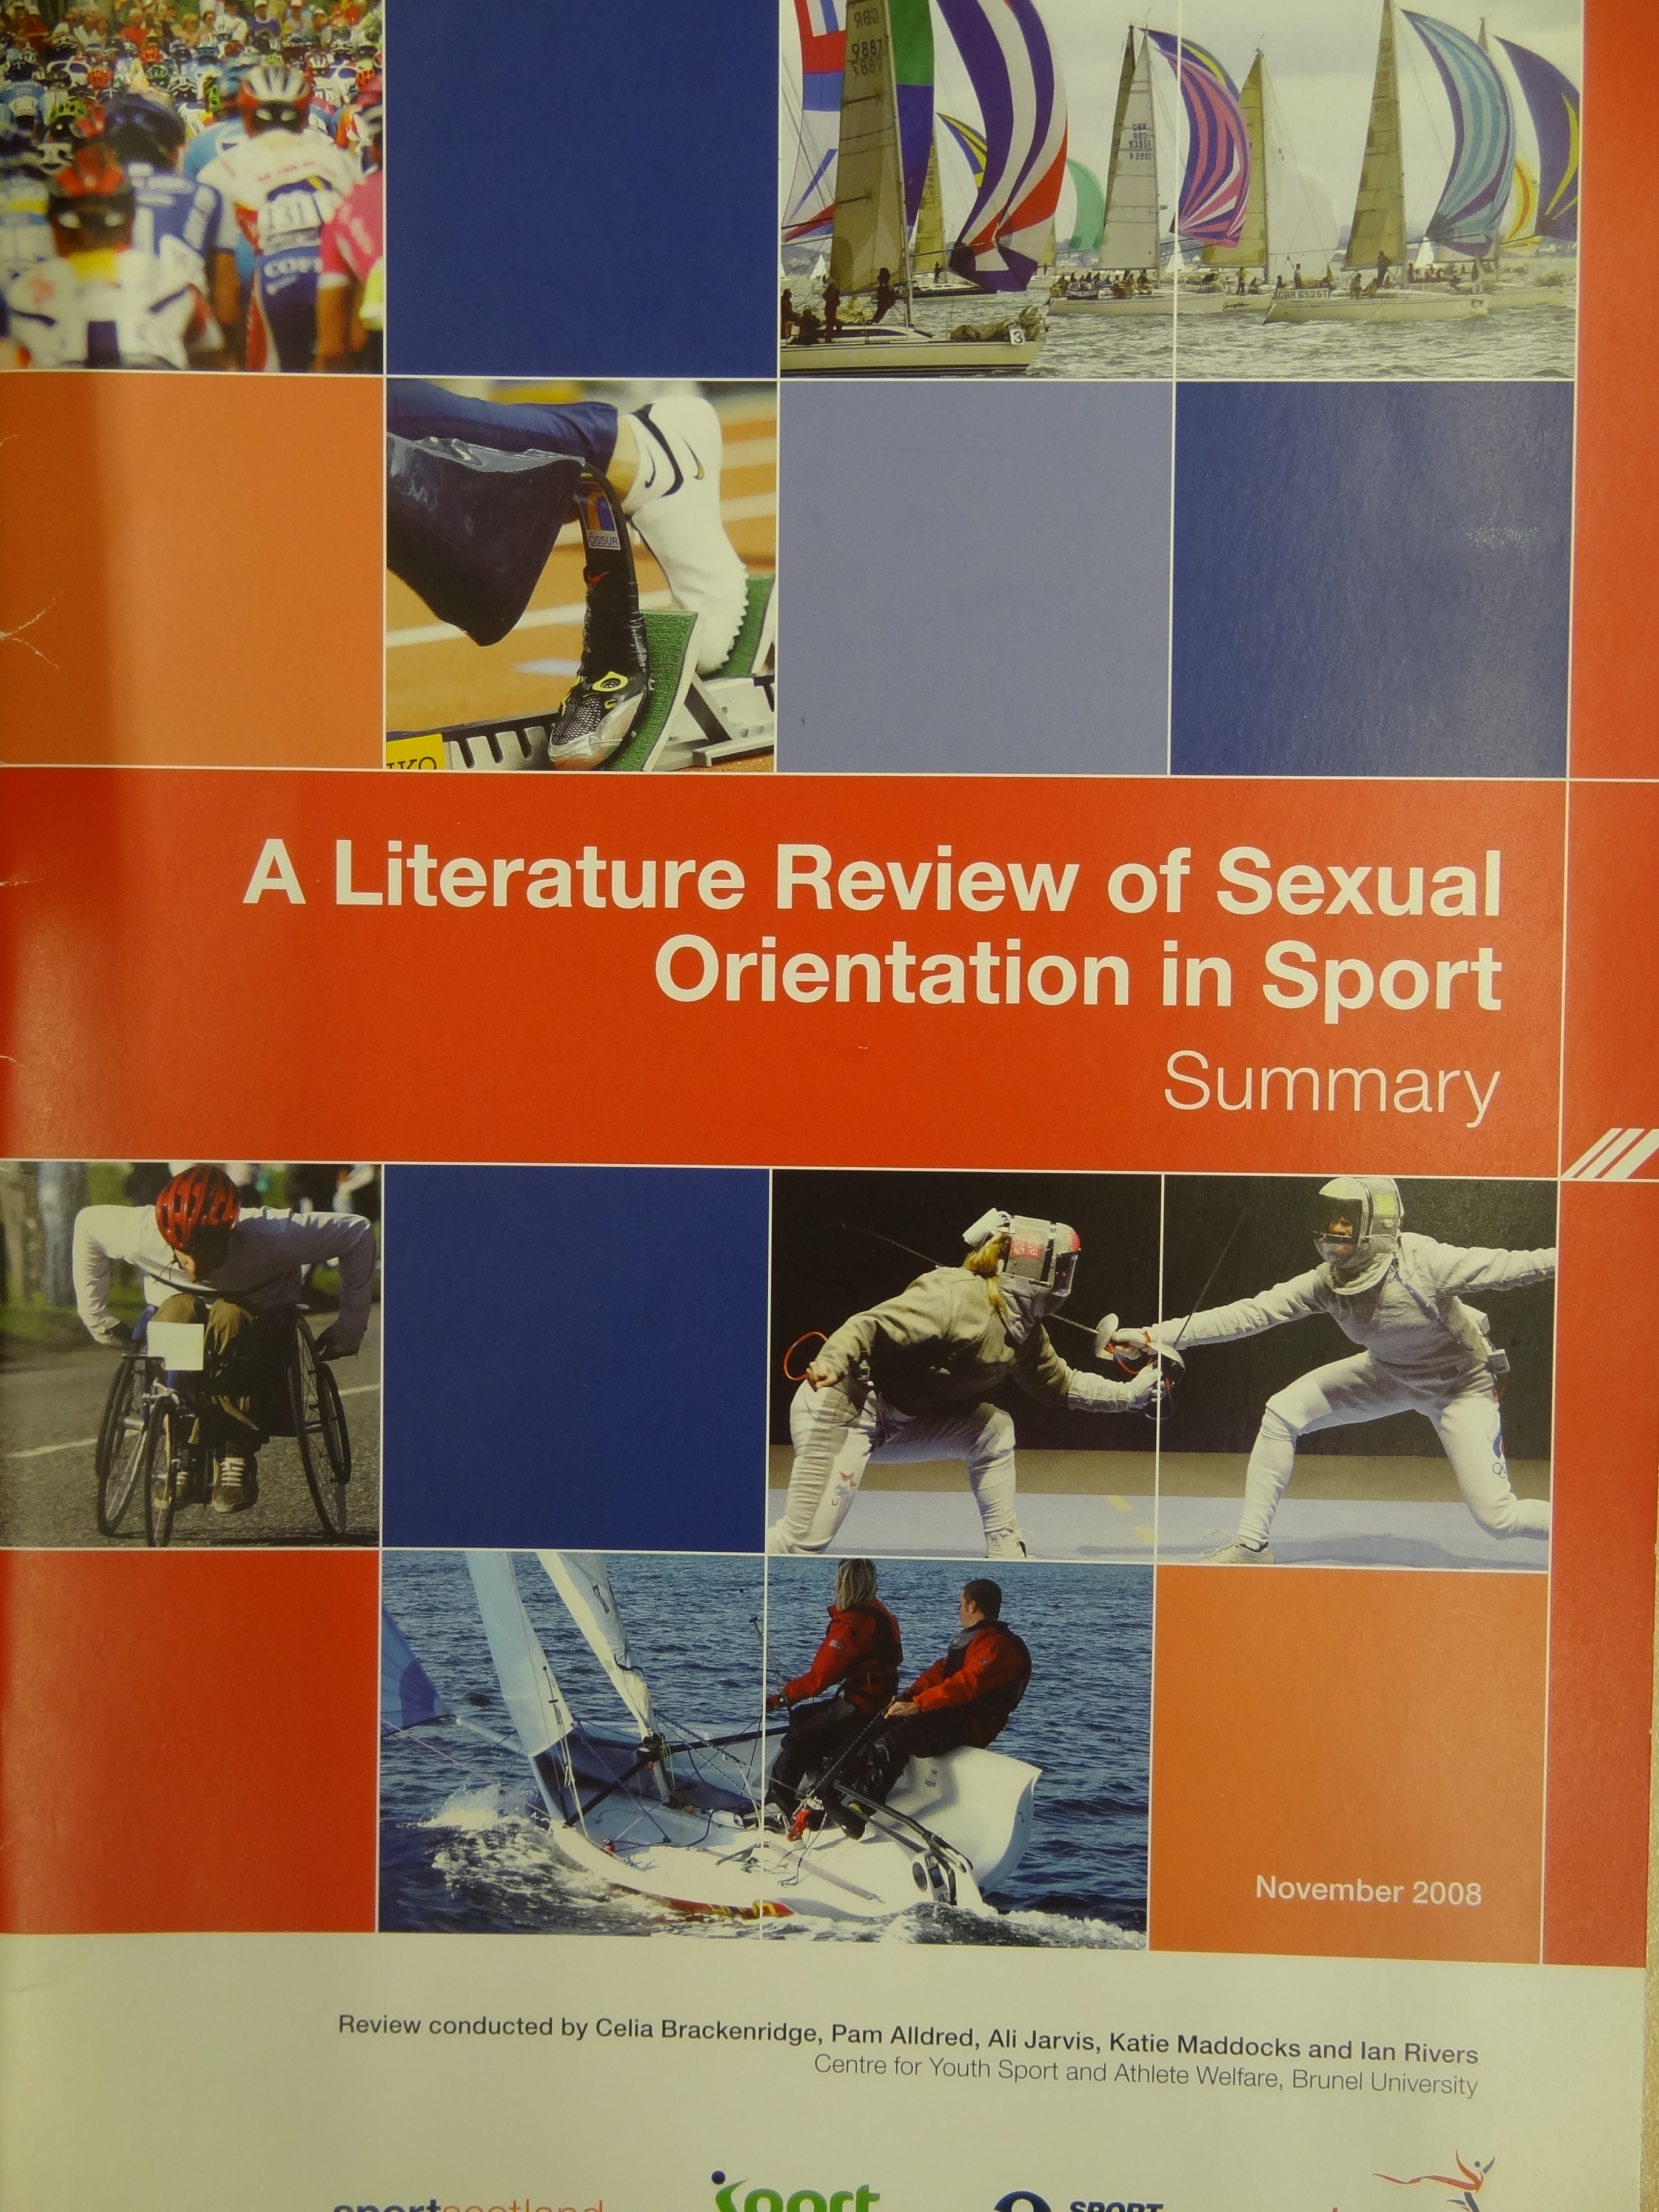 Sexual orientation literature review